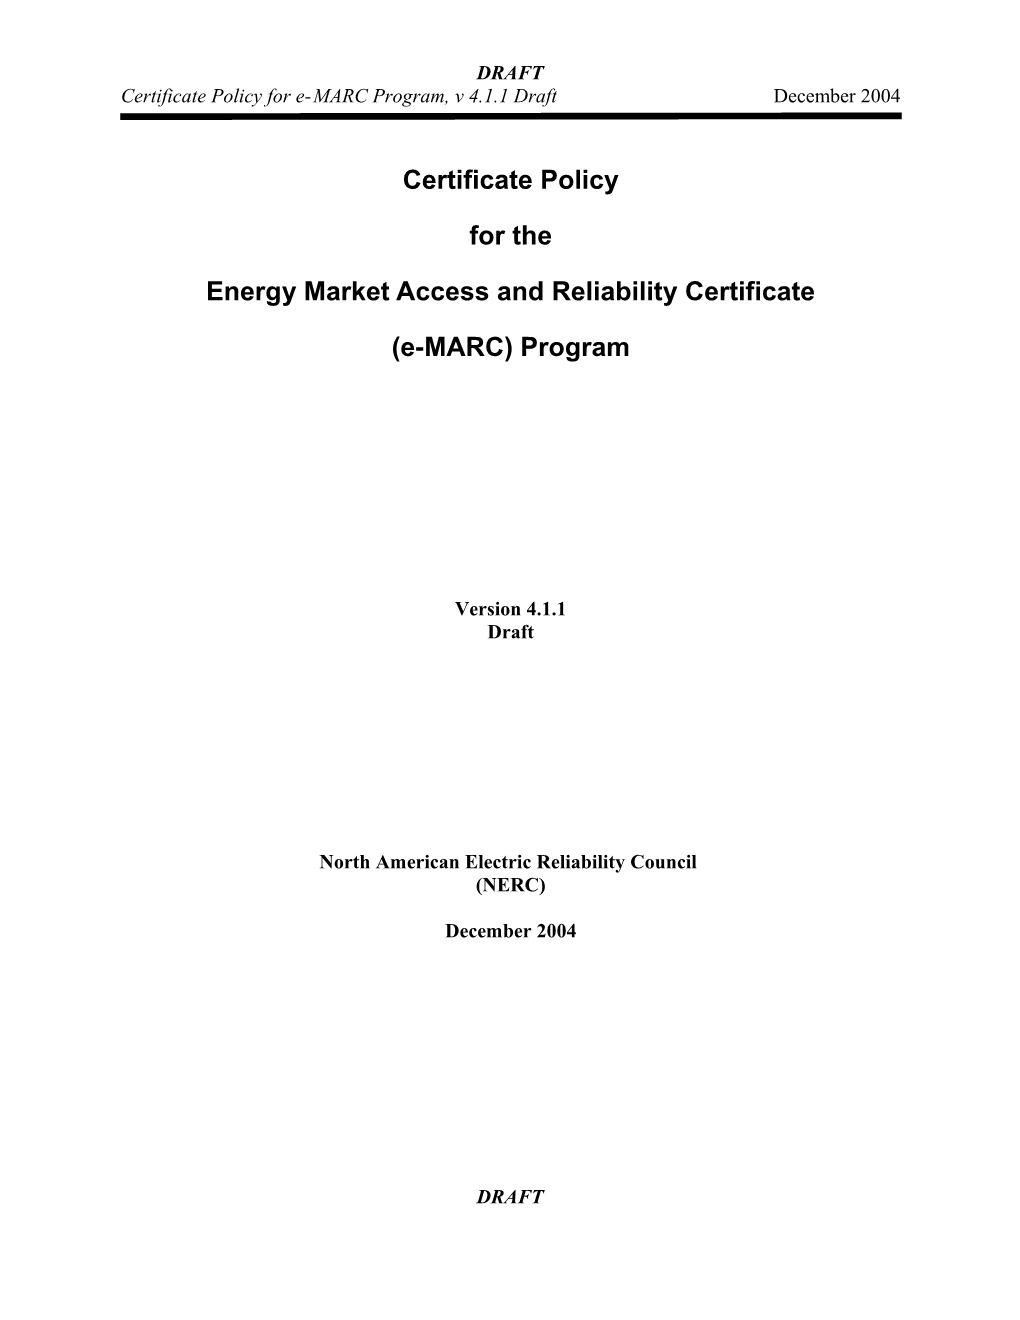 Certificate Policy for Emarc Program, V. 4.1.1 Draft December 2004